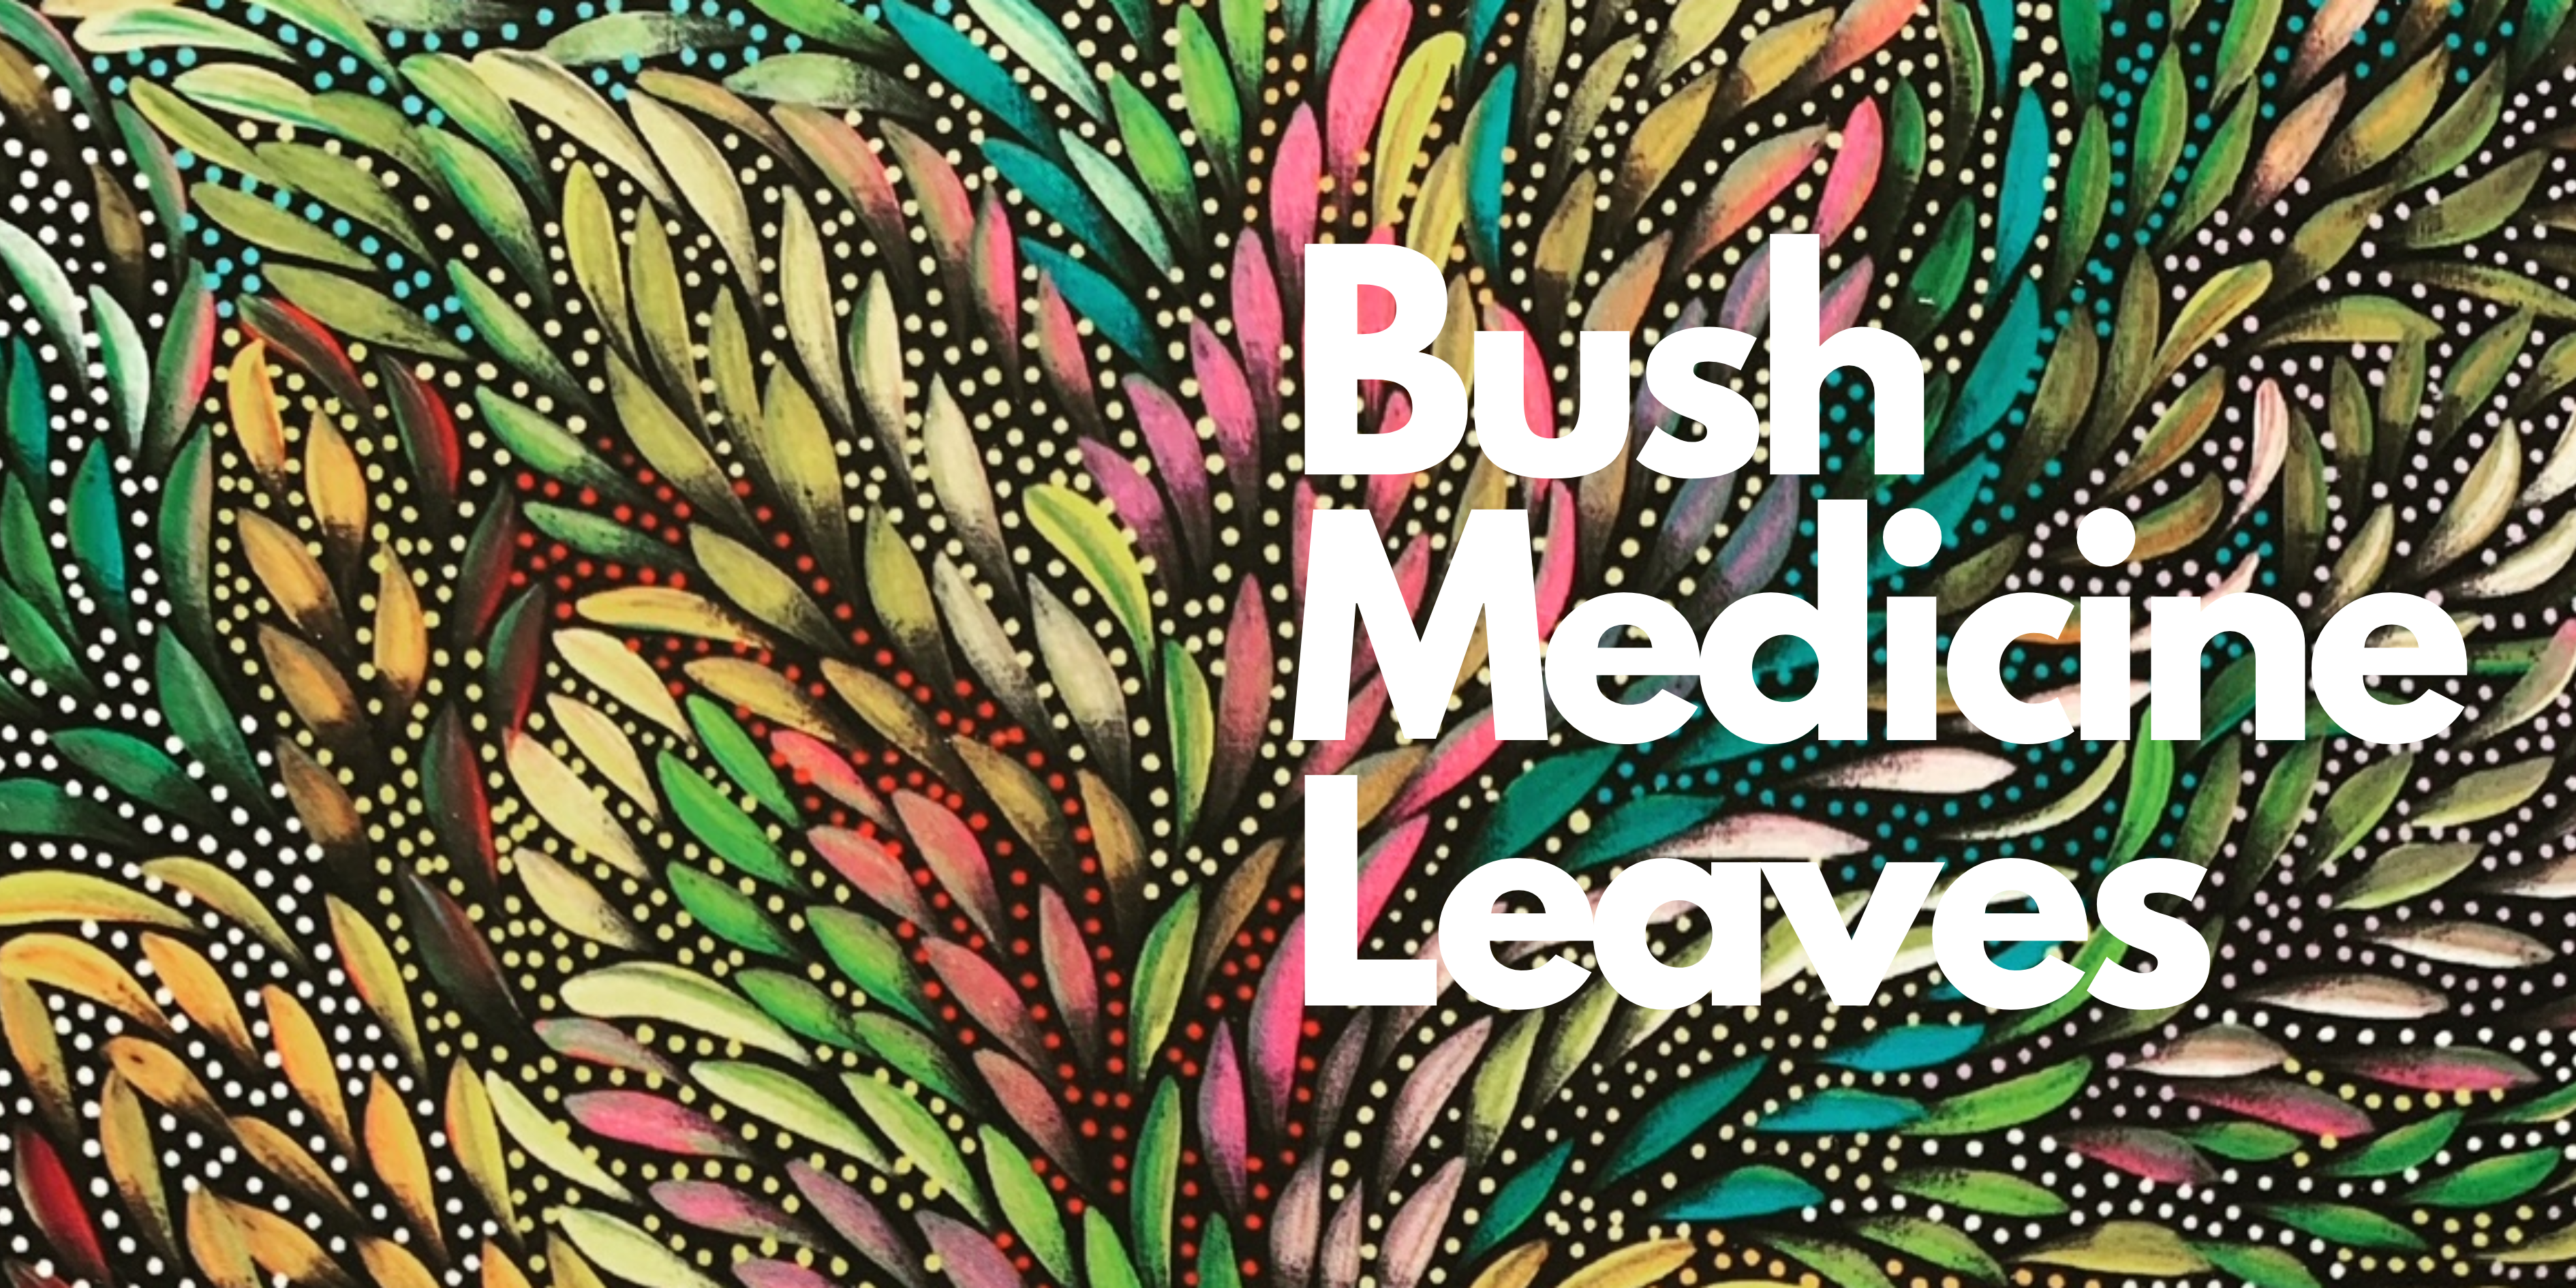 Bush Medicine Leaves